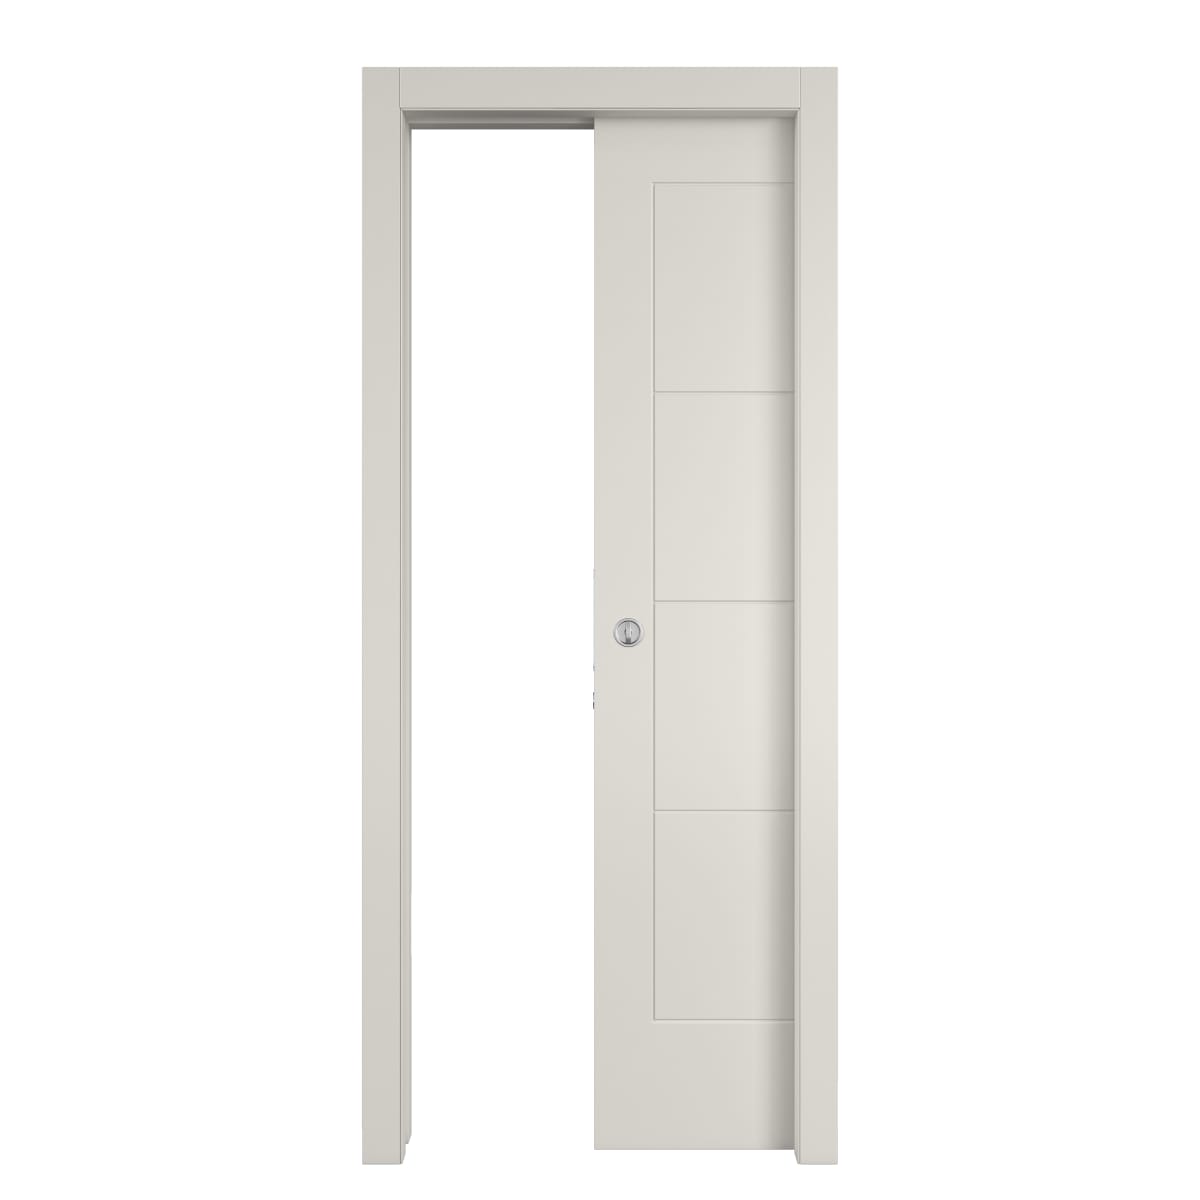 WHITE RIBERA SLIDING DOOR 80X210